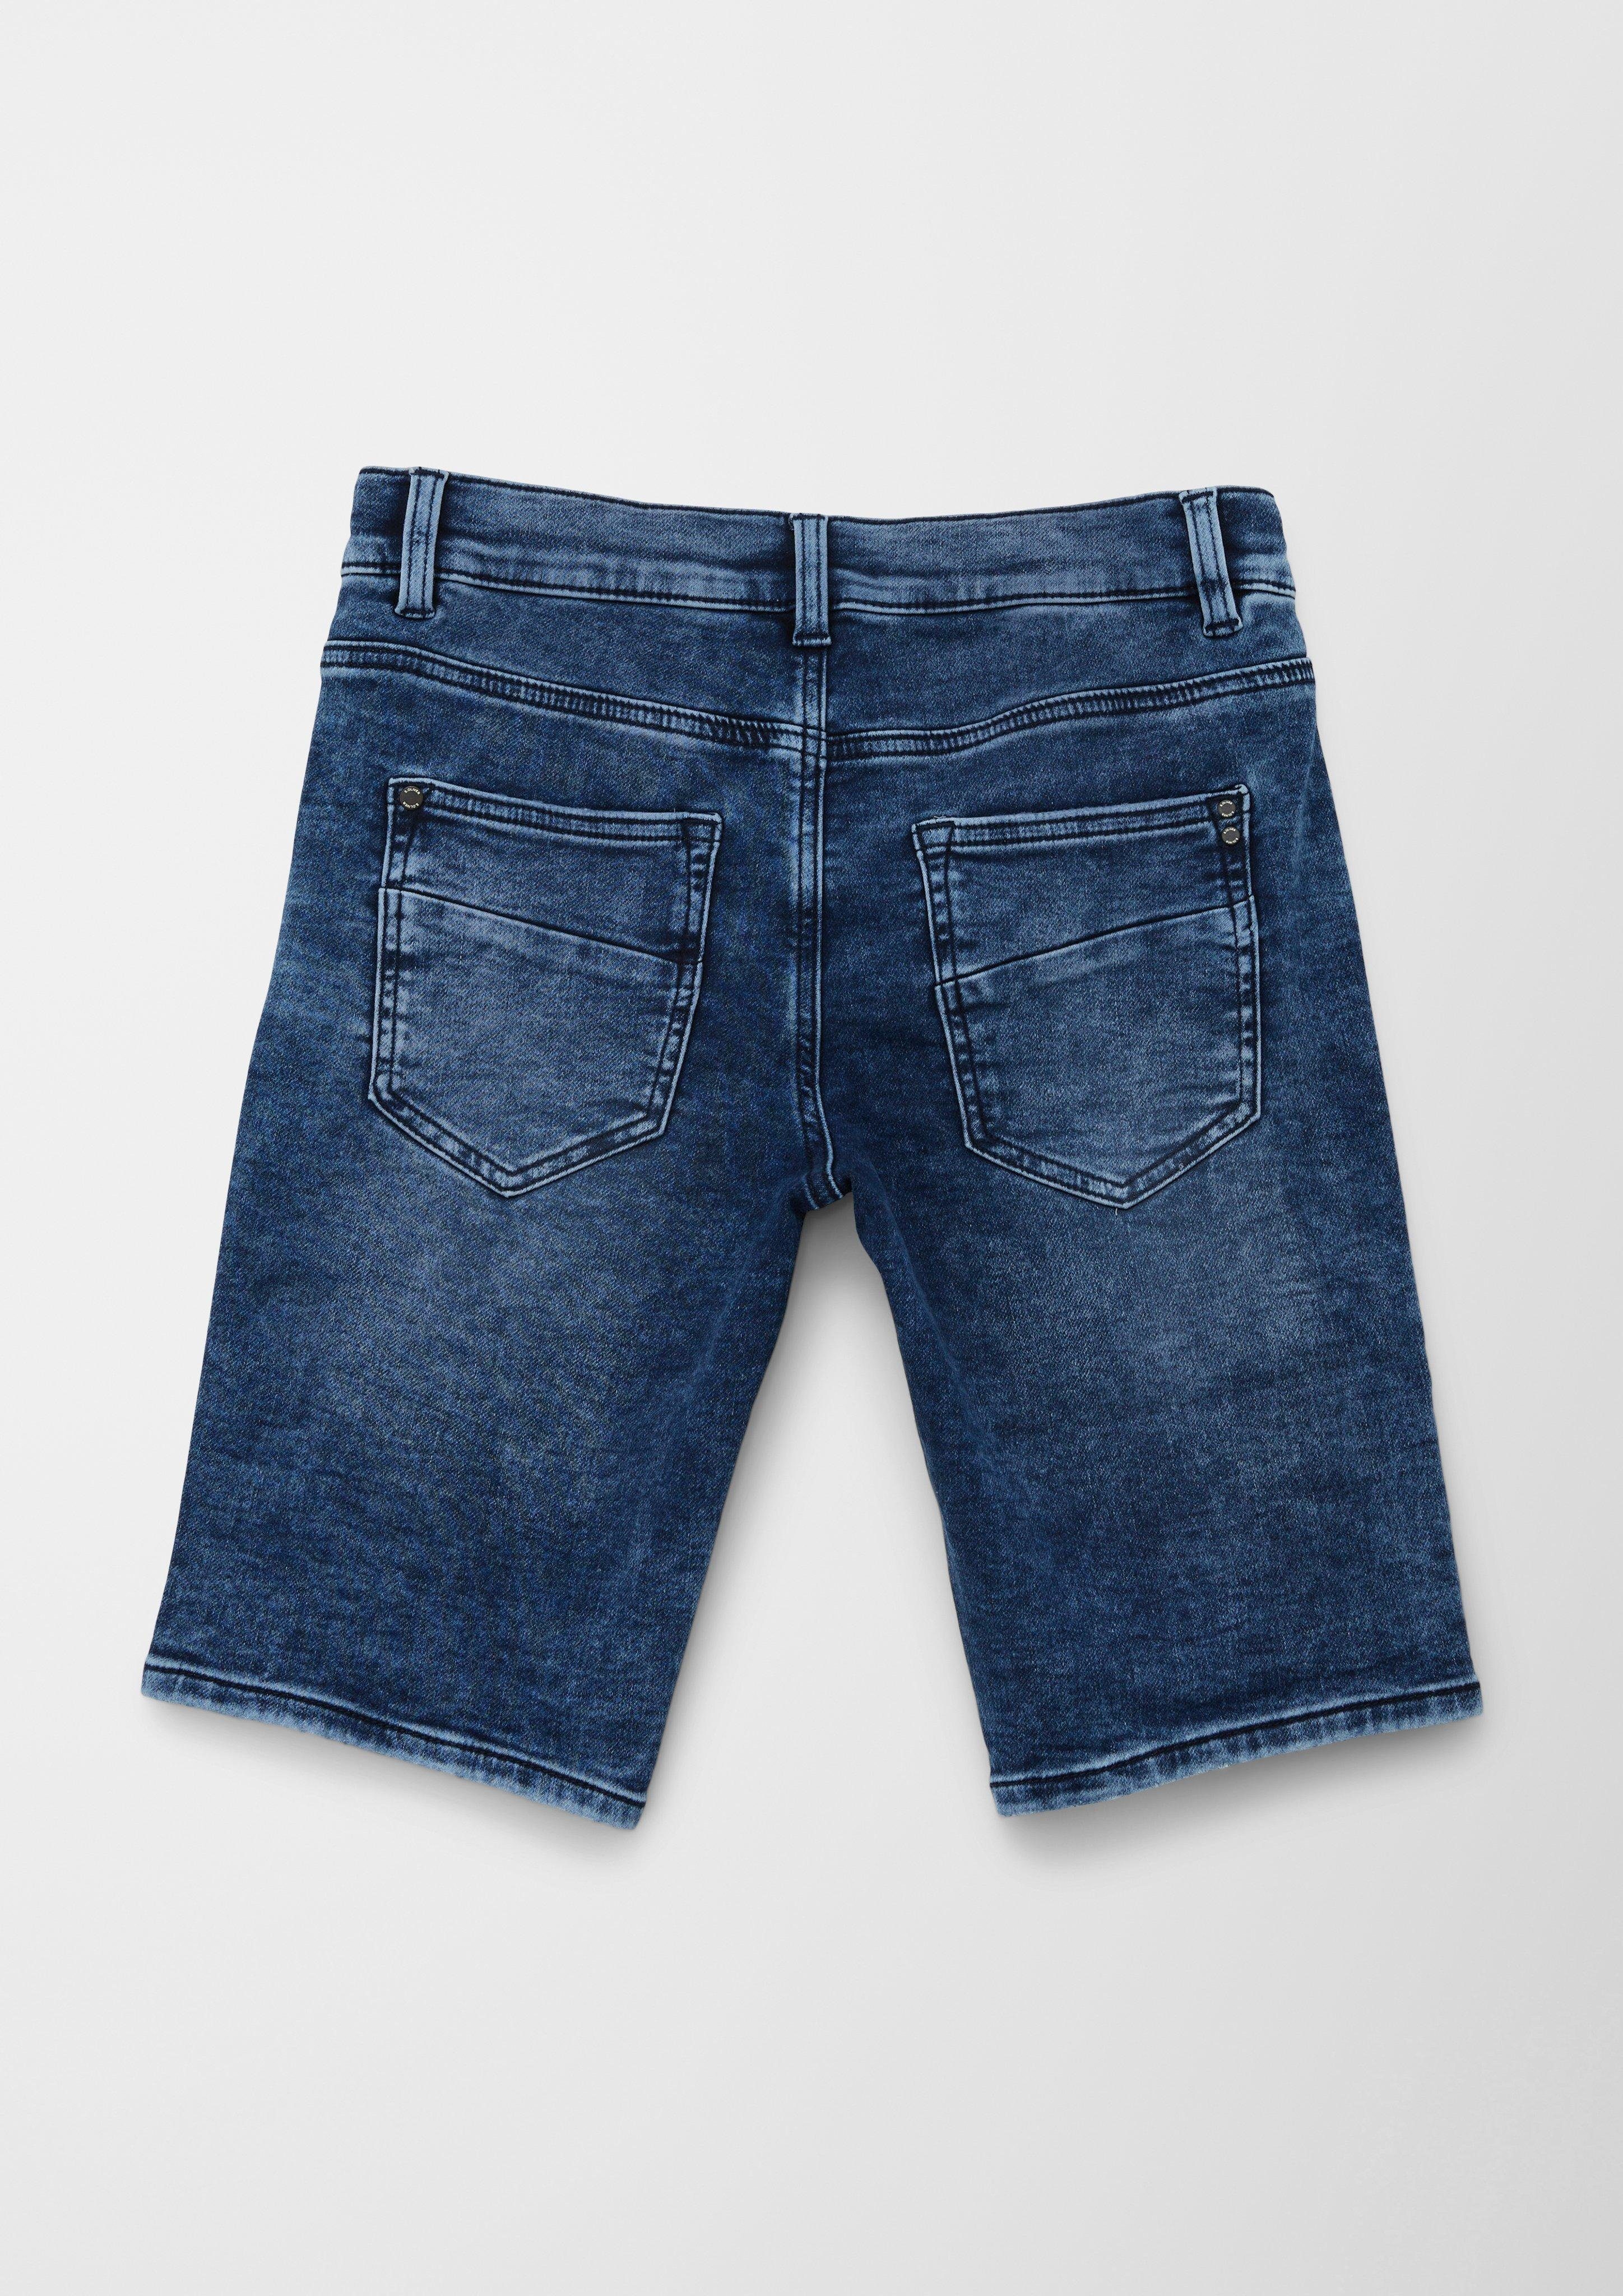 / Fit Rise Destroyes Waschung, / s.Oliver / Leg Slim Mid Jeansshorts Seattle Jeans-Bermuda Regular